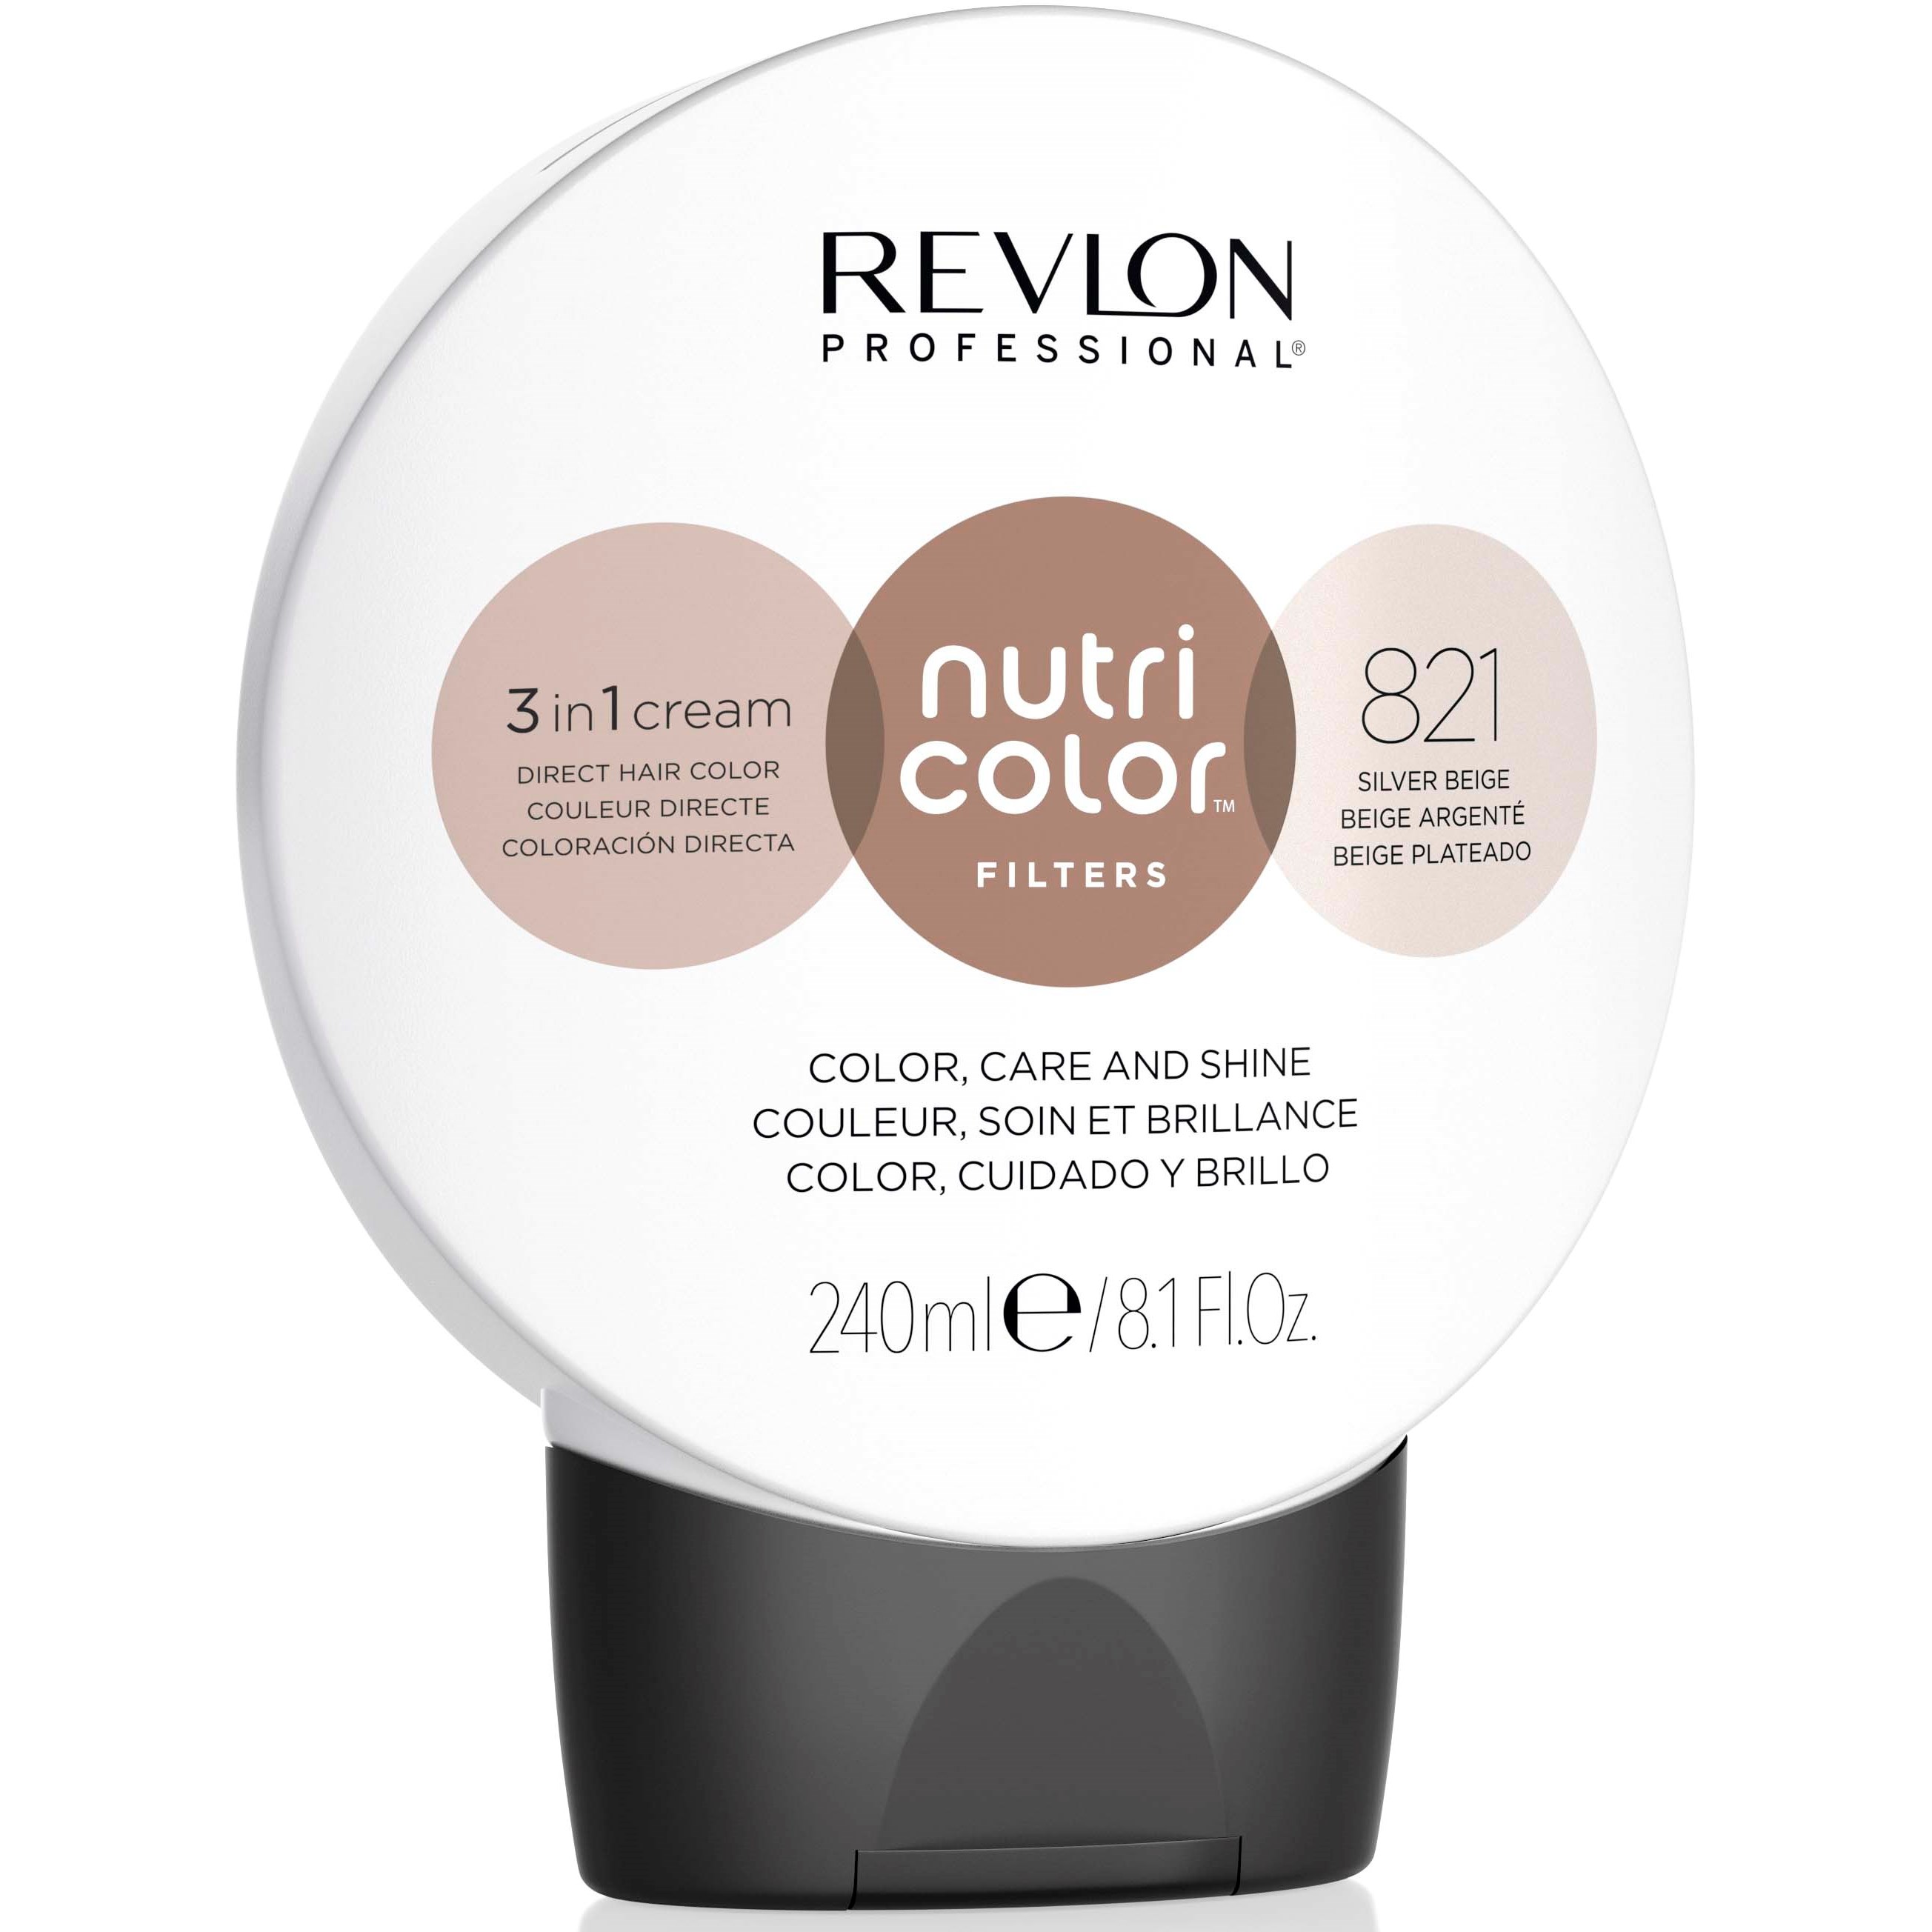 Läs mer om Revlon Nutri Color Filters 821 Silver Beige